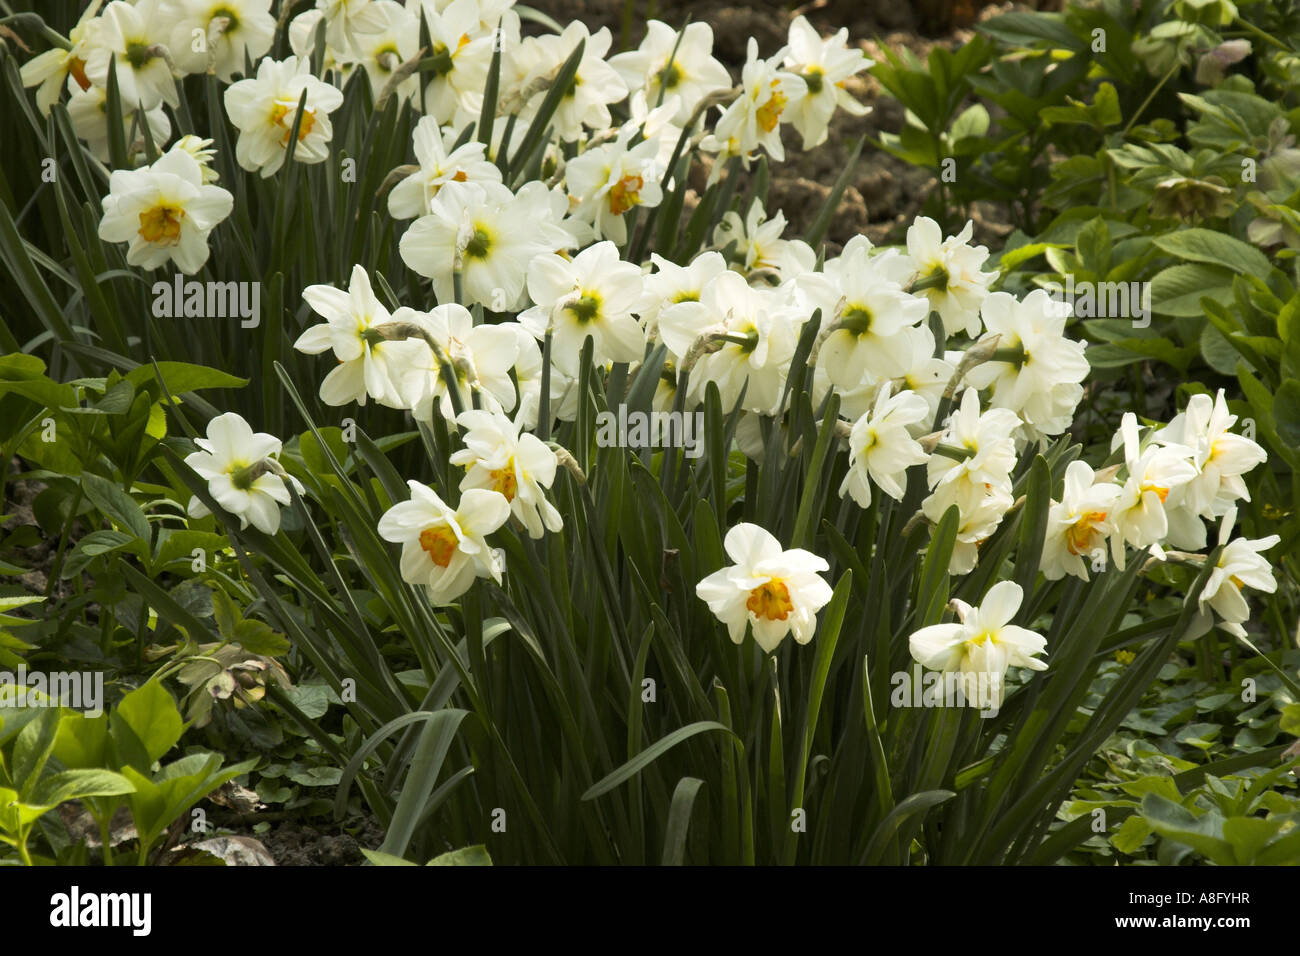 Daffodils / Narcissus. Stock Photo